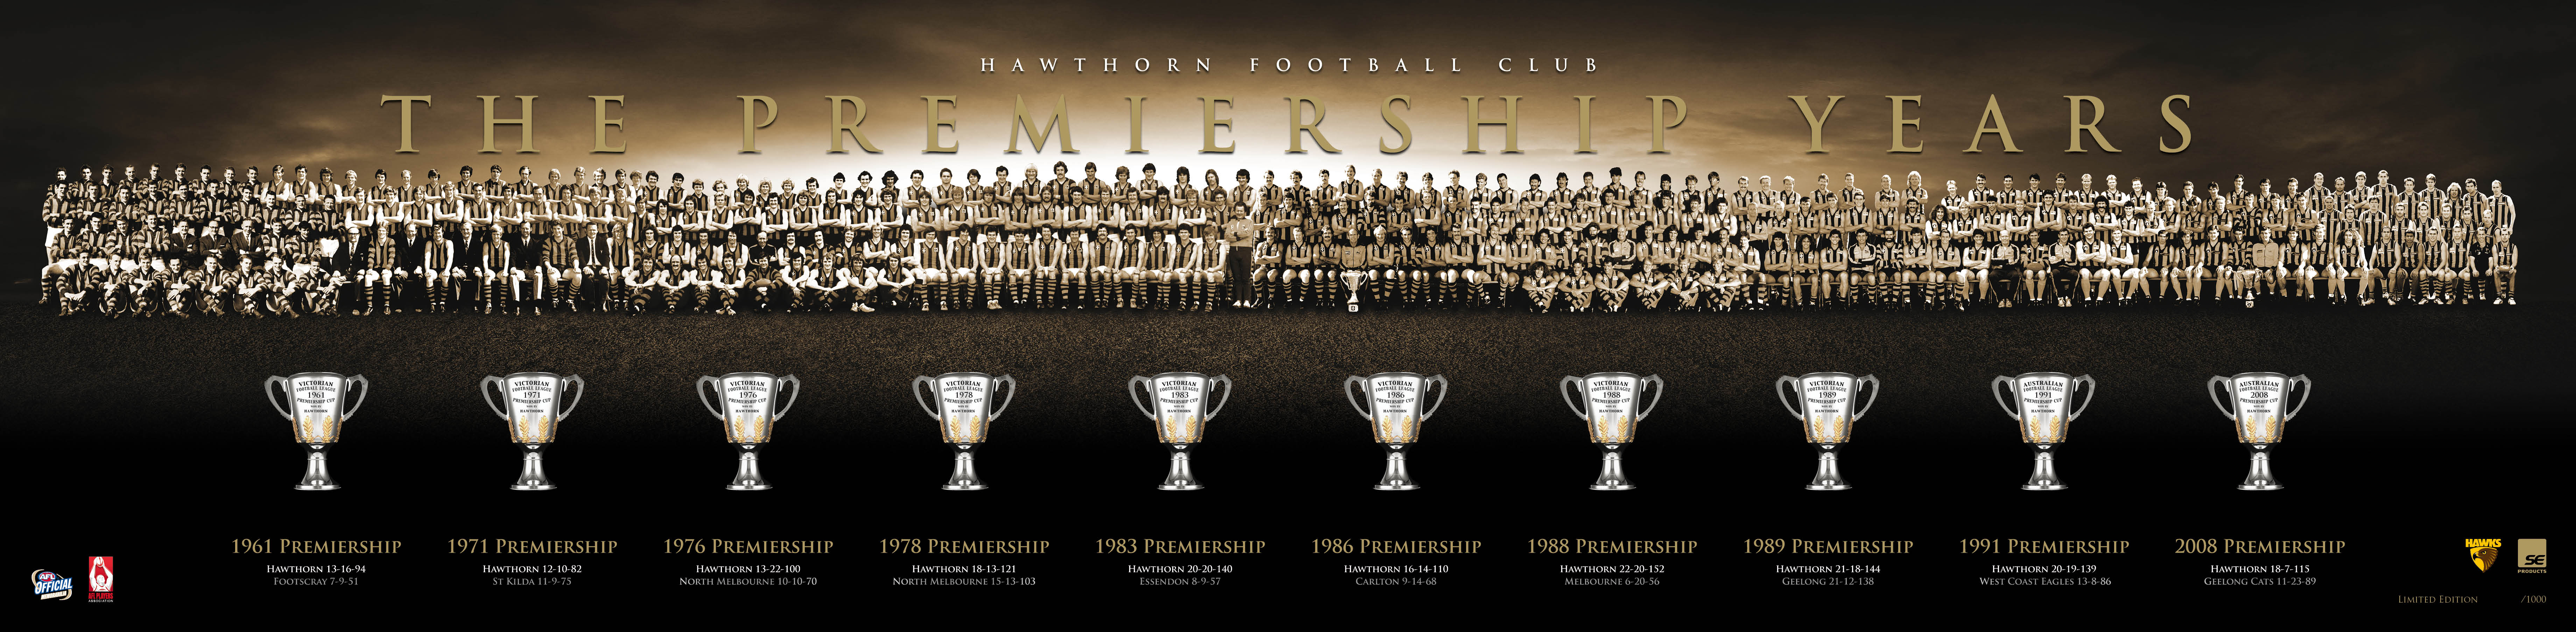 Hawthorn Football club The Premiership Years 100x27cm paper - Chamton